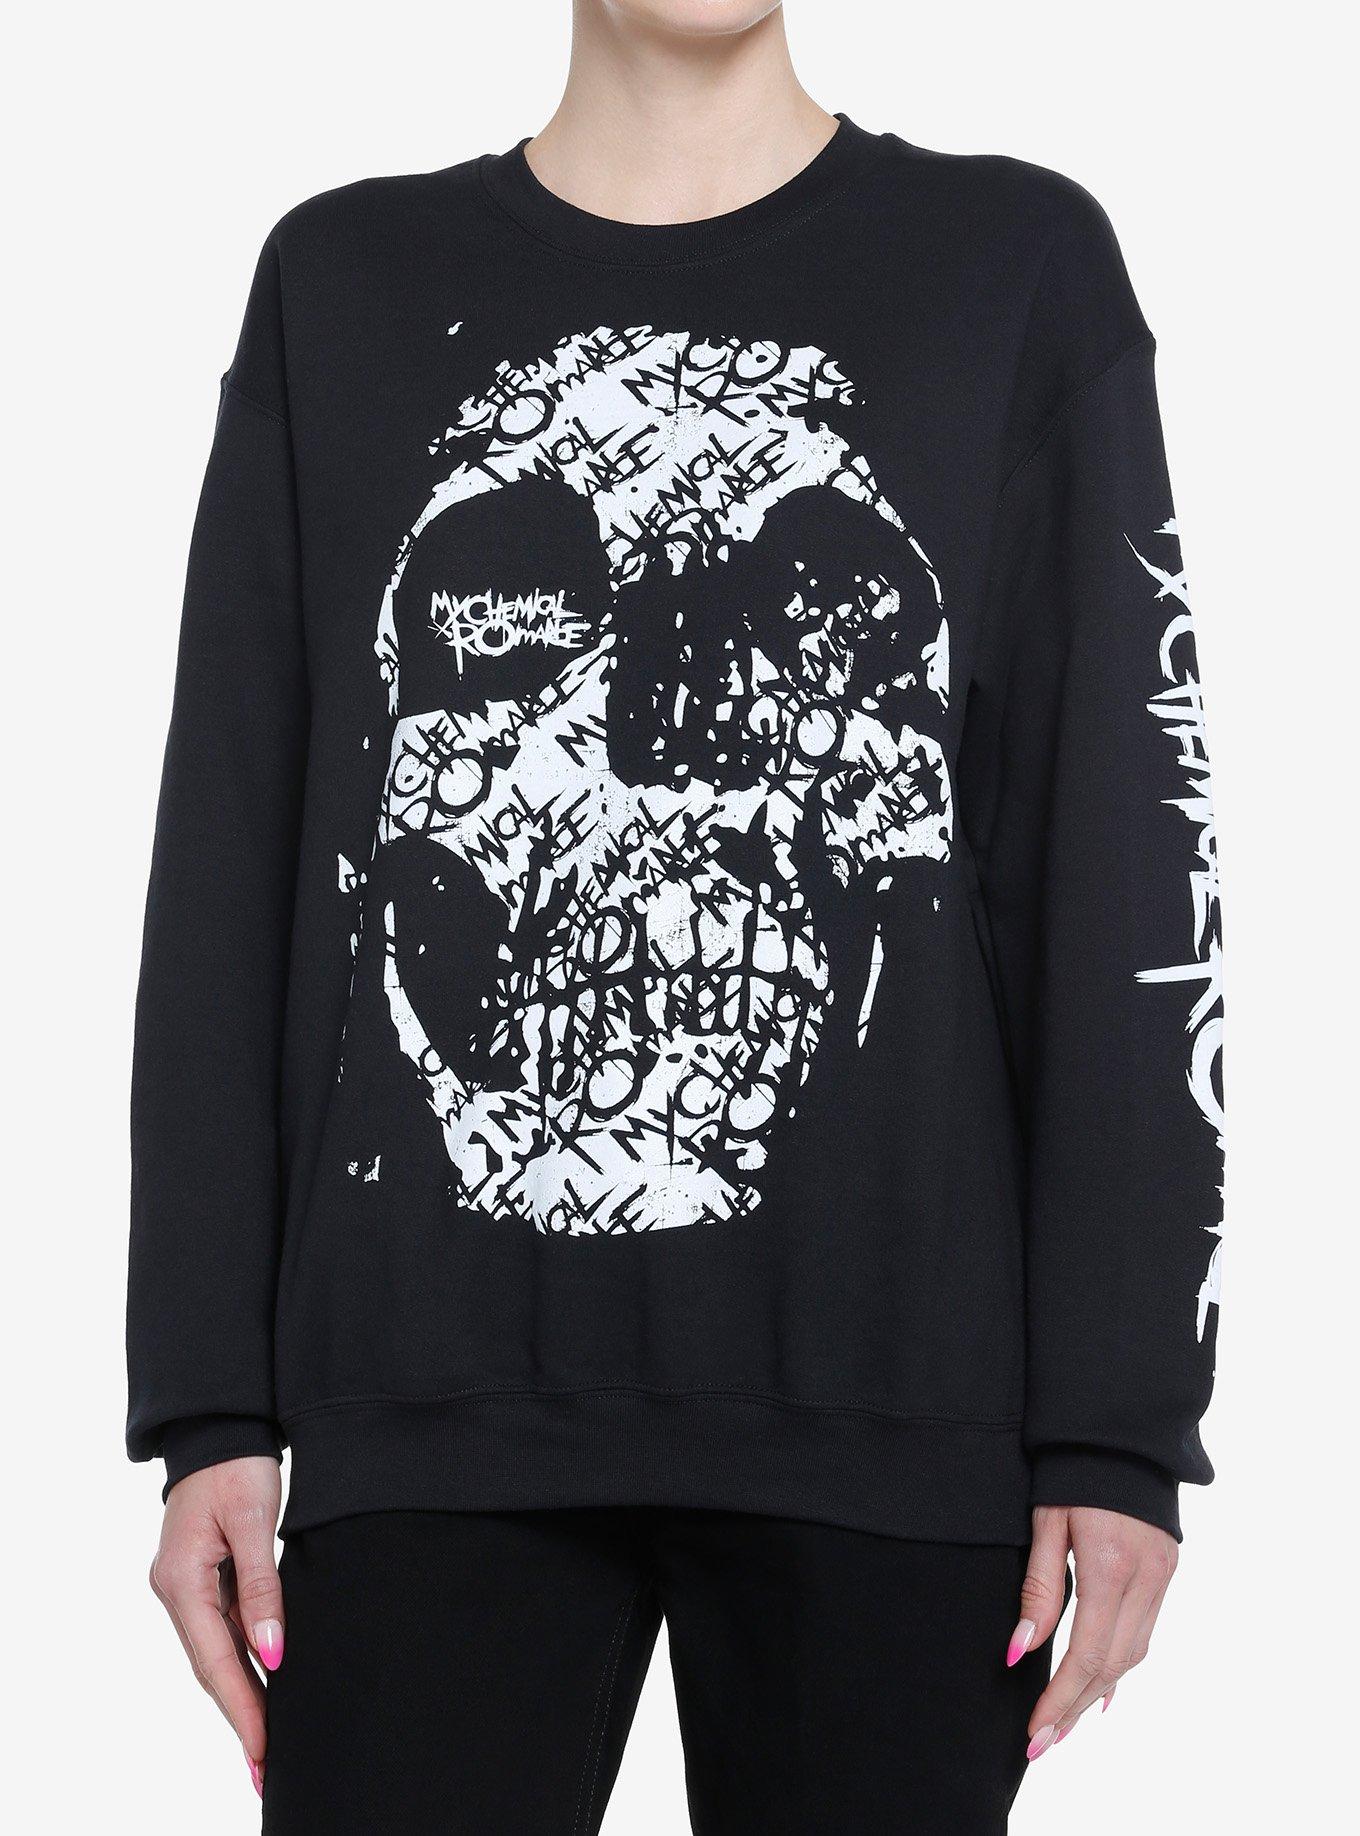 My Chemical Romance Skull Scribble Girls Sweatshirt | Hot Topic